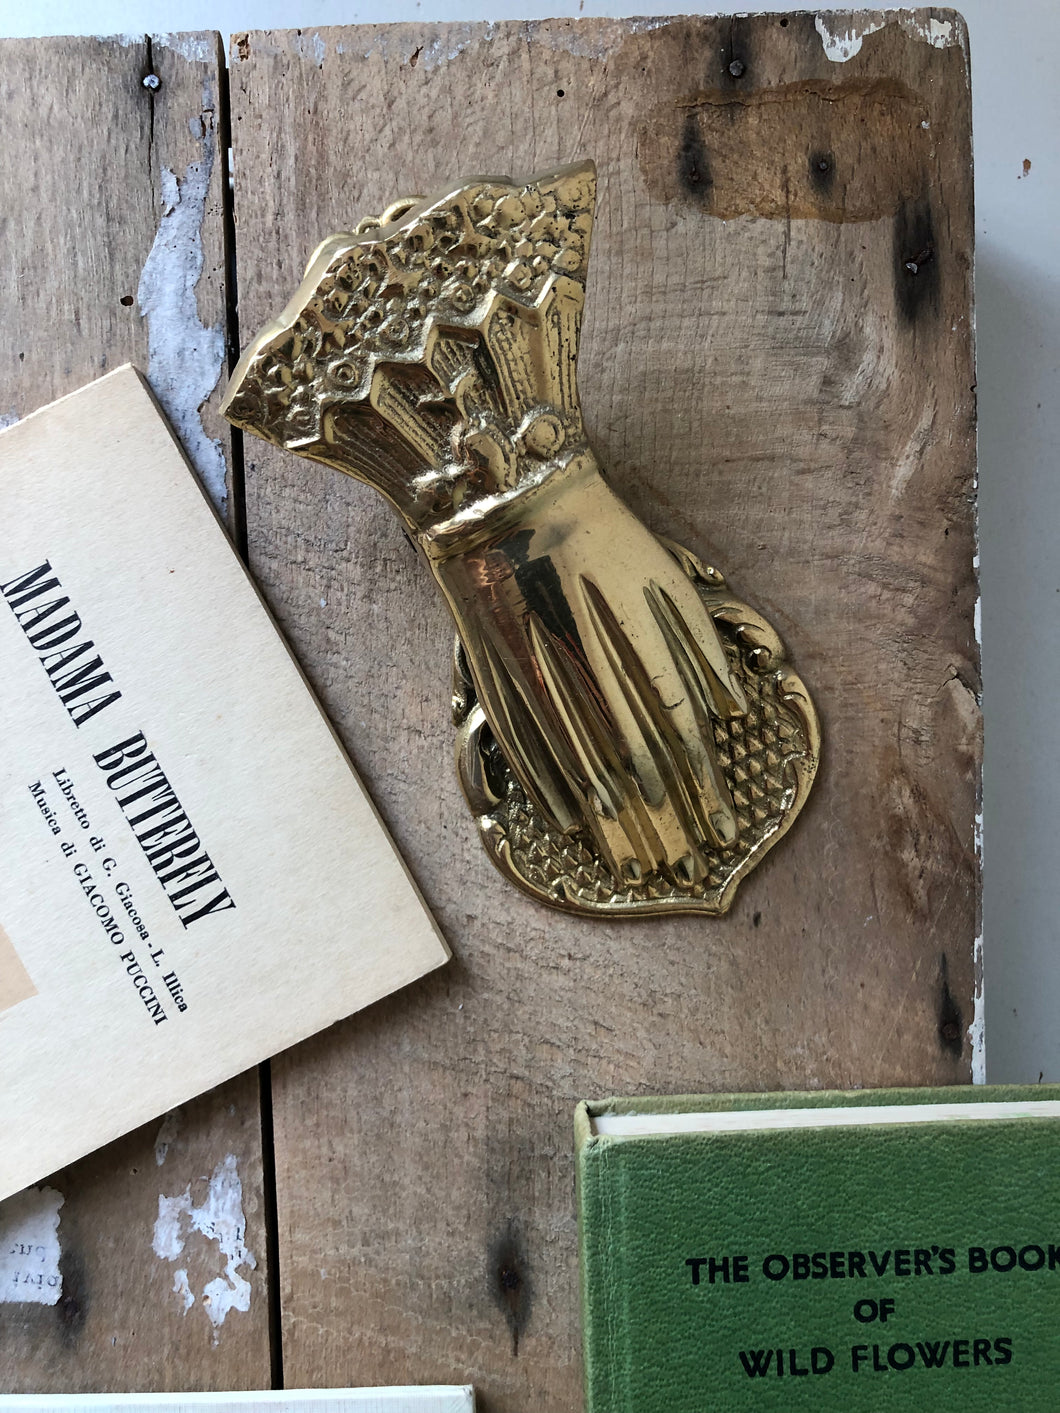 Large Brass Hand Clip / Paper Holder